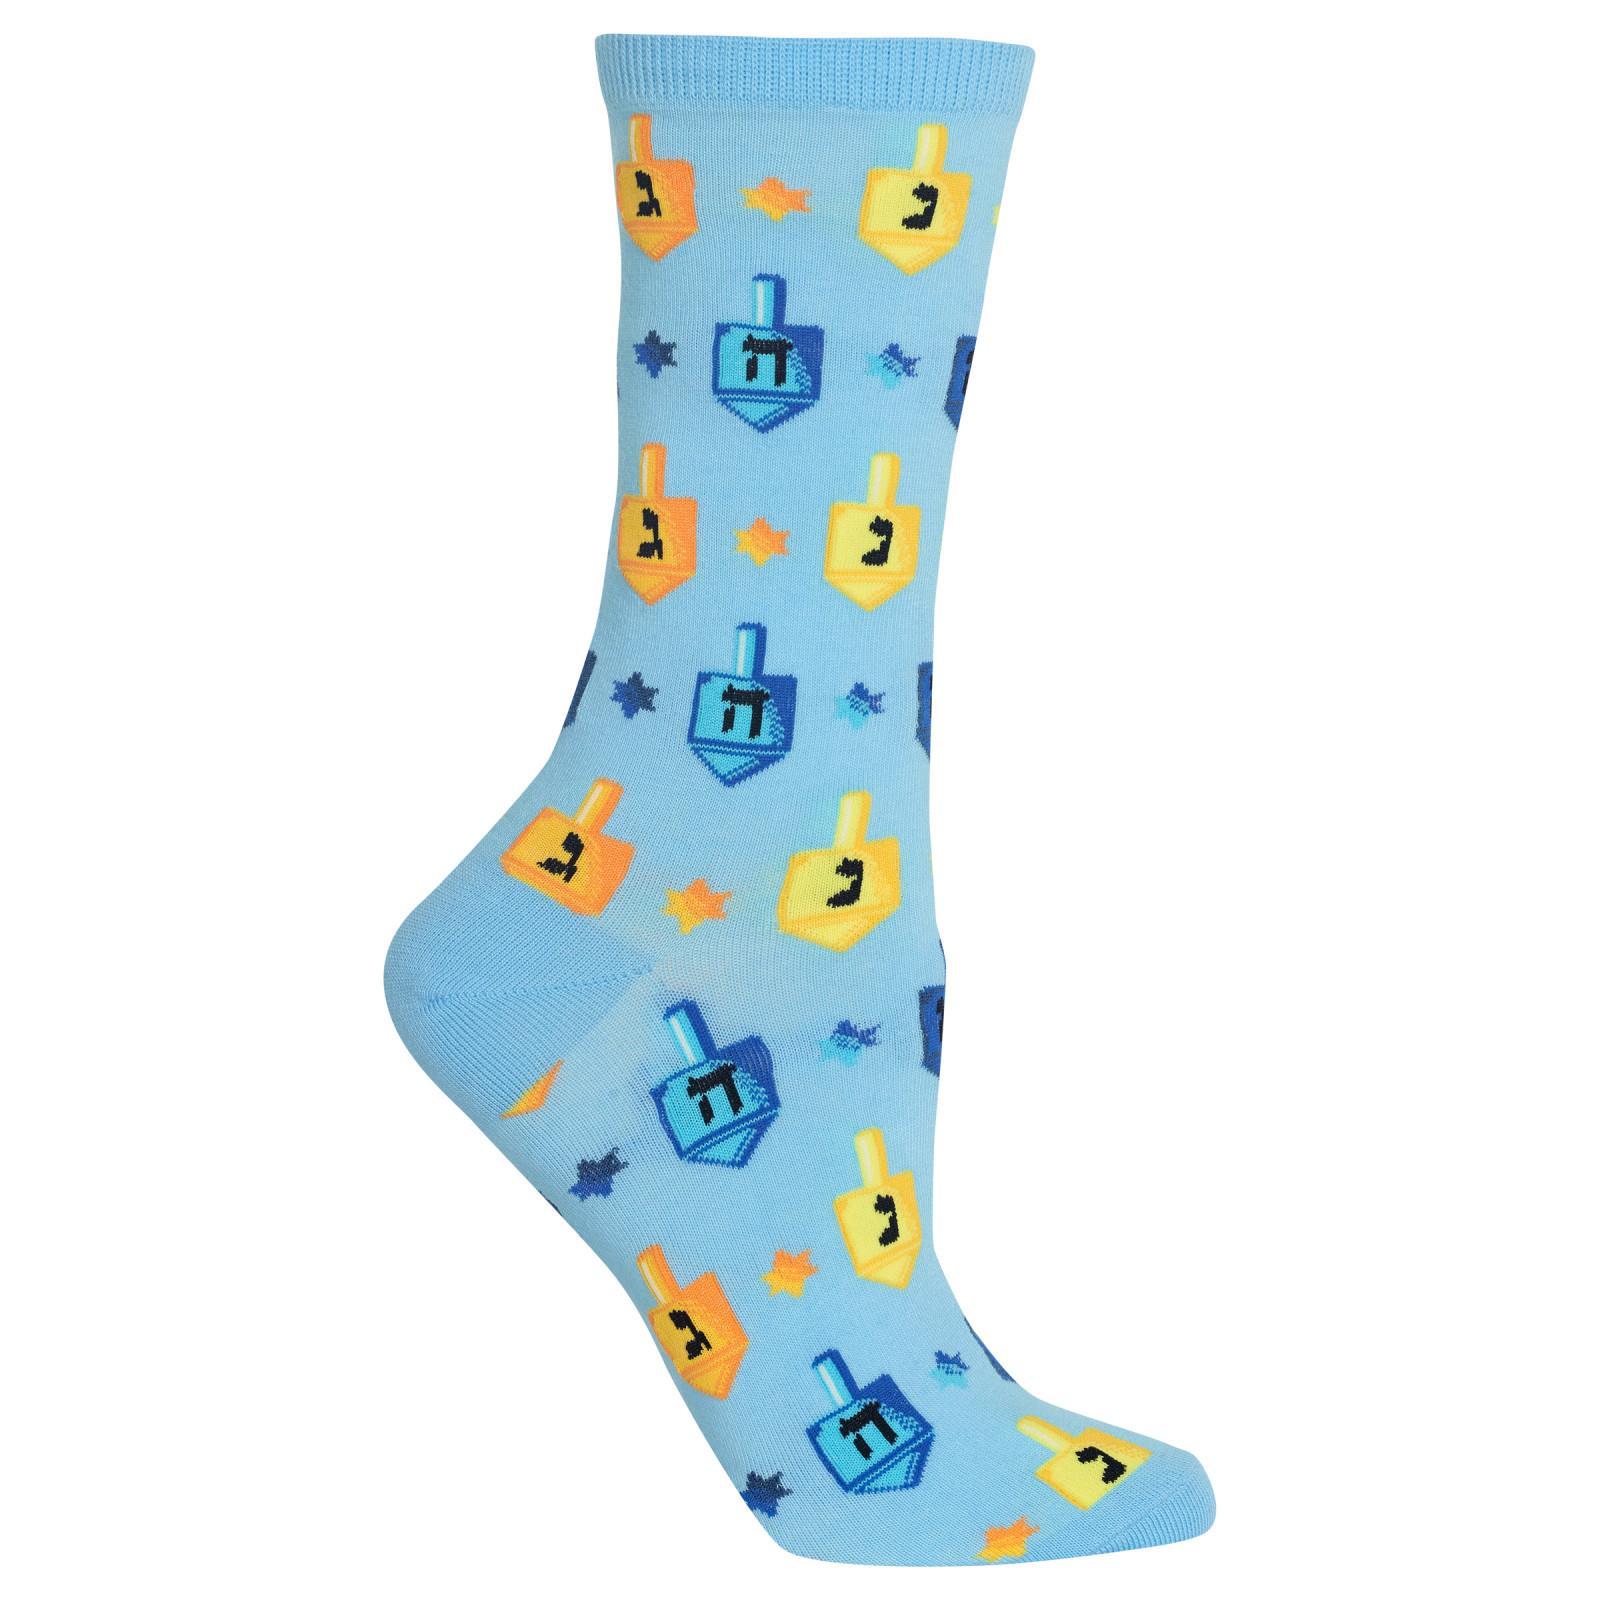 Hot Sox Socks GBlueay / One Size Women's Dreidels Crew Socks - Blue